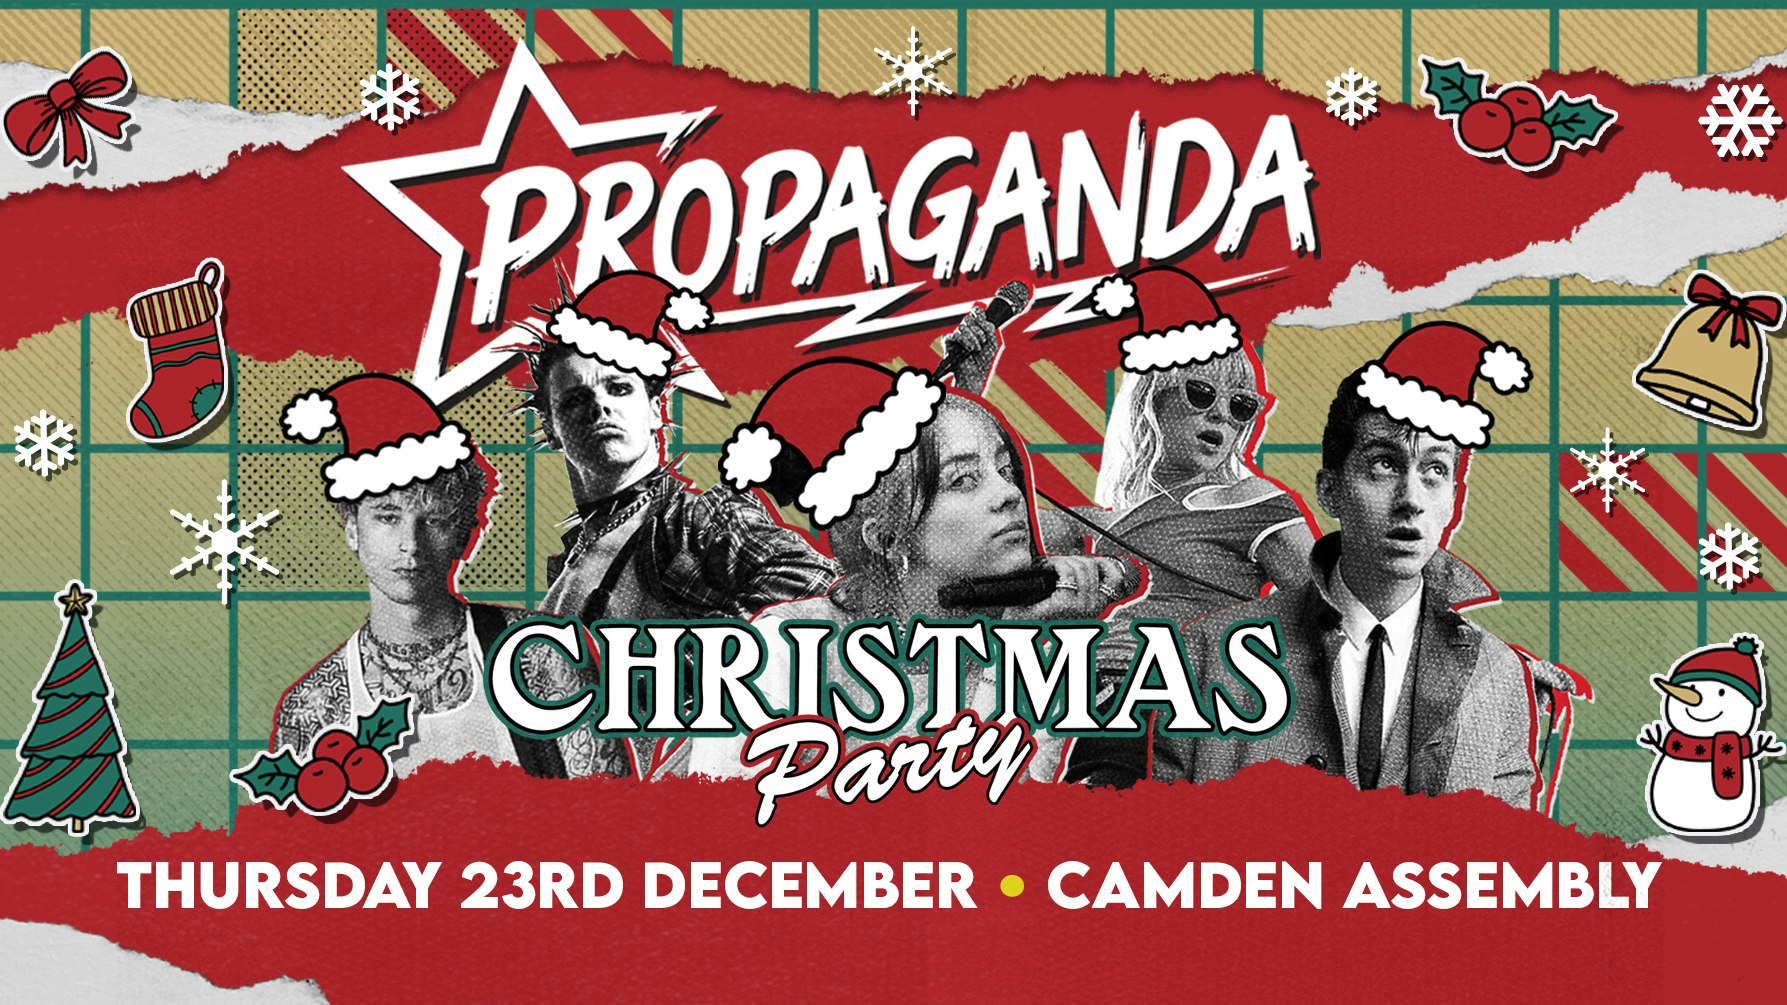 Propaganda London – Christmas Party!